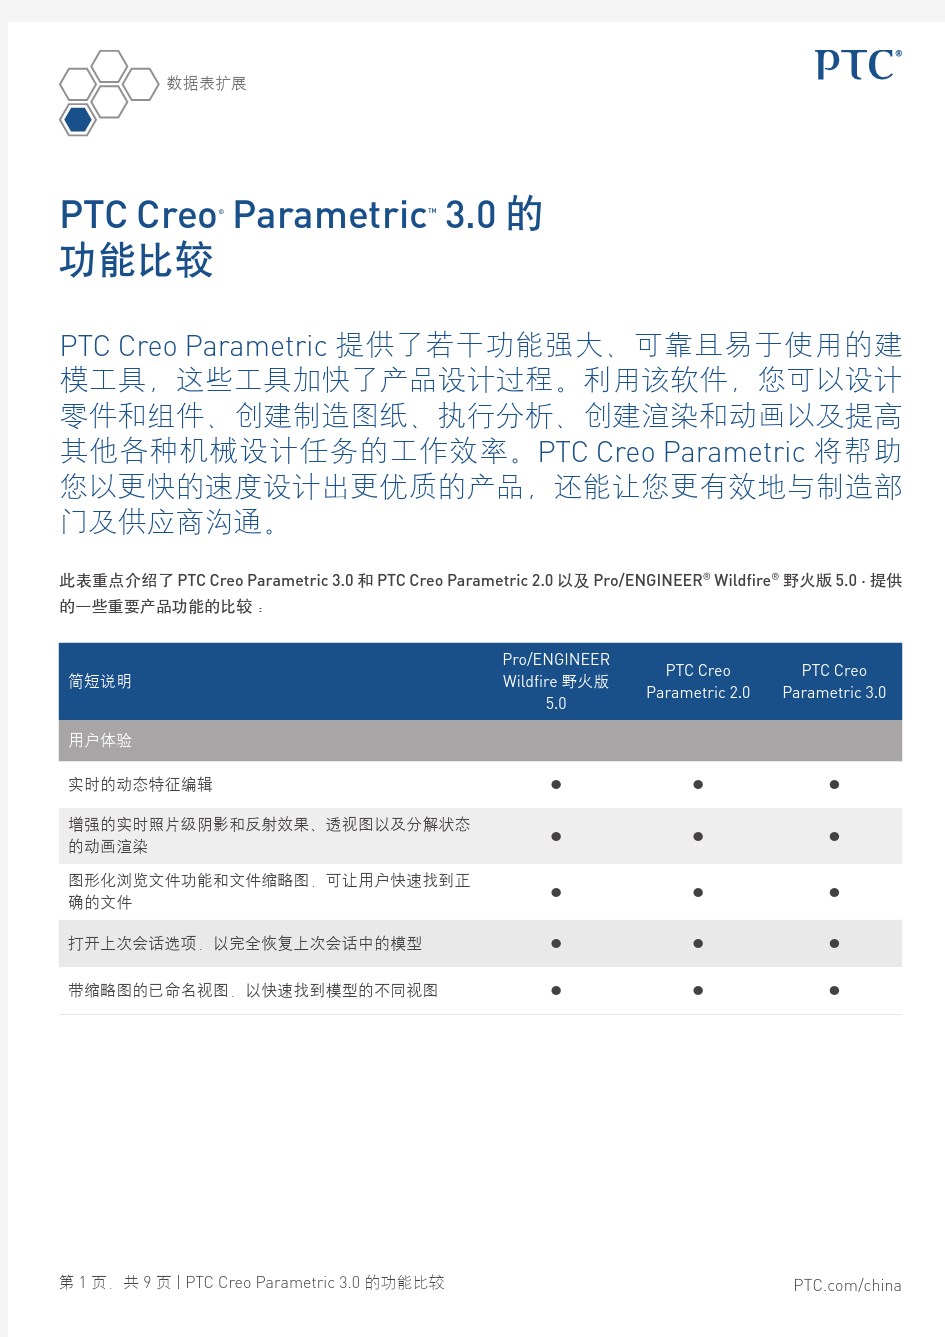 PTC Creo Parametric 3.0 与以往版本的比较